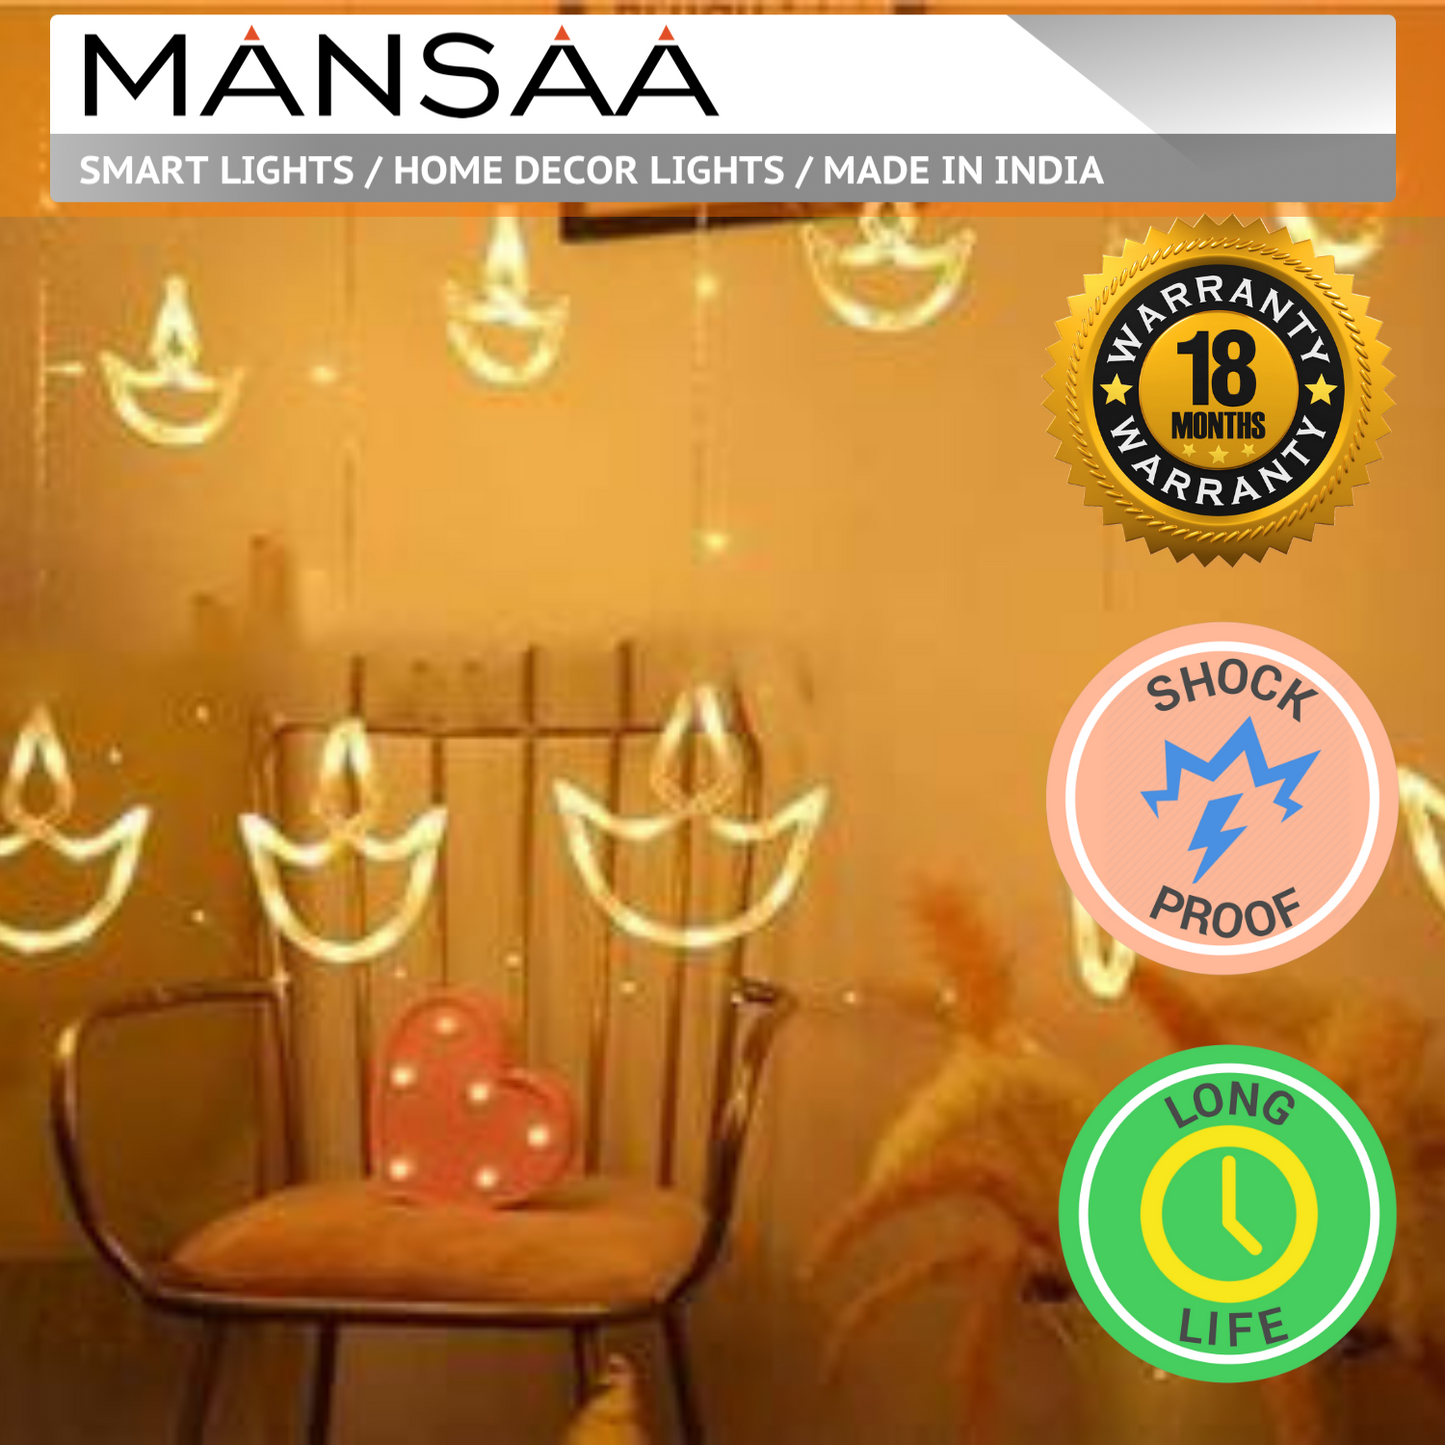 MANSAA Diya Curtain Decorative Lights with 8 Flashing Modes